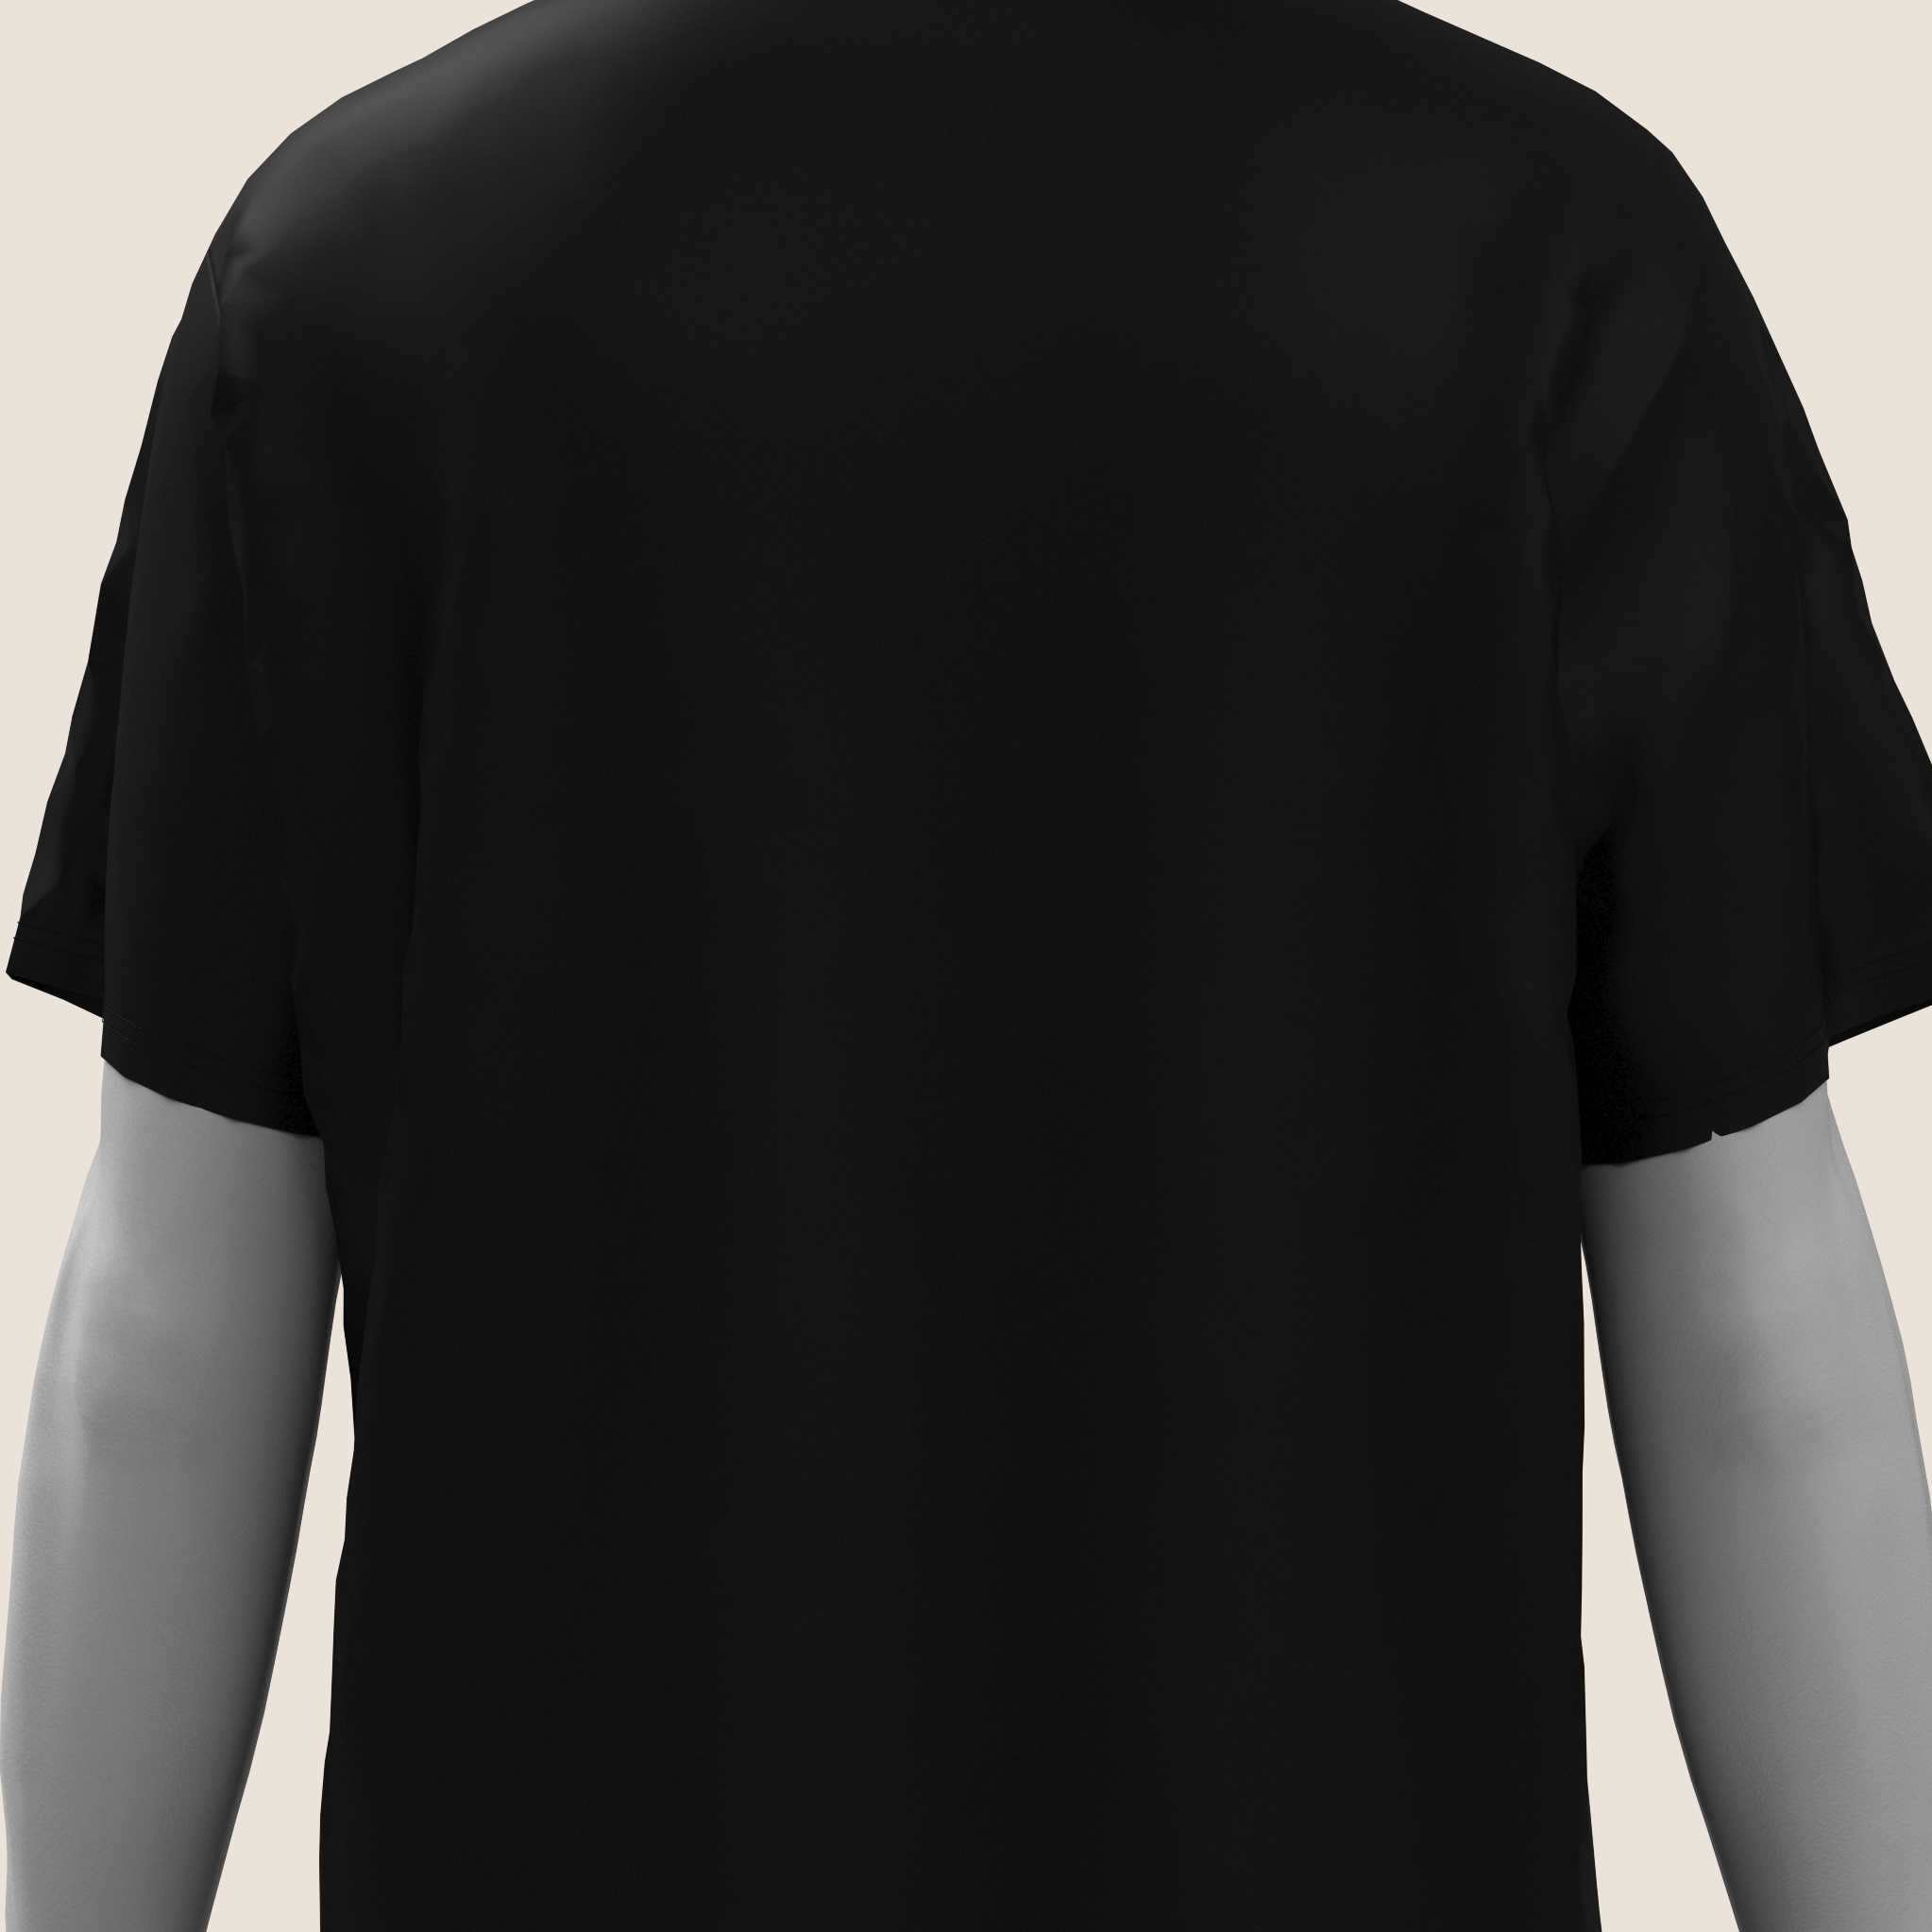 Signature v1 Unisex T-Shirt - Black